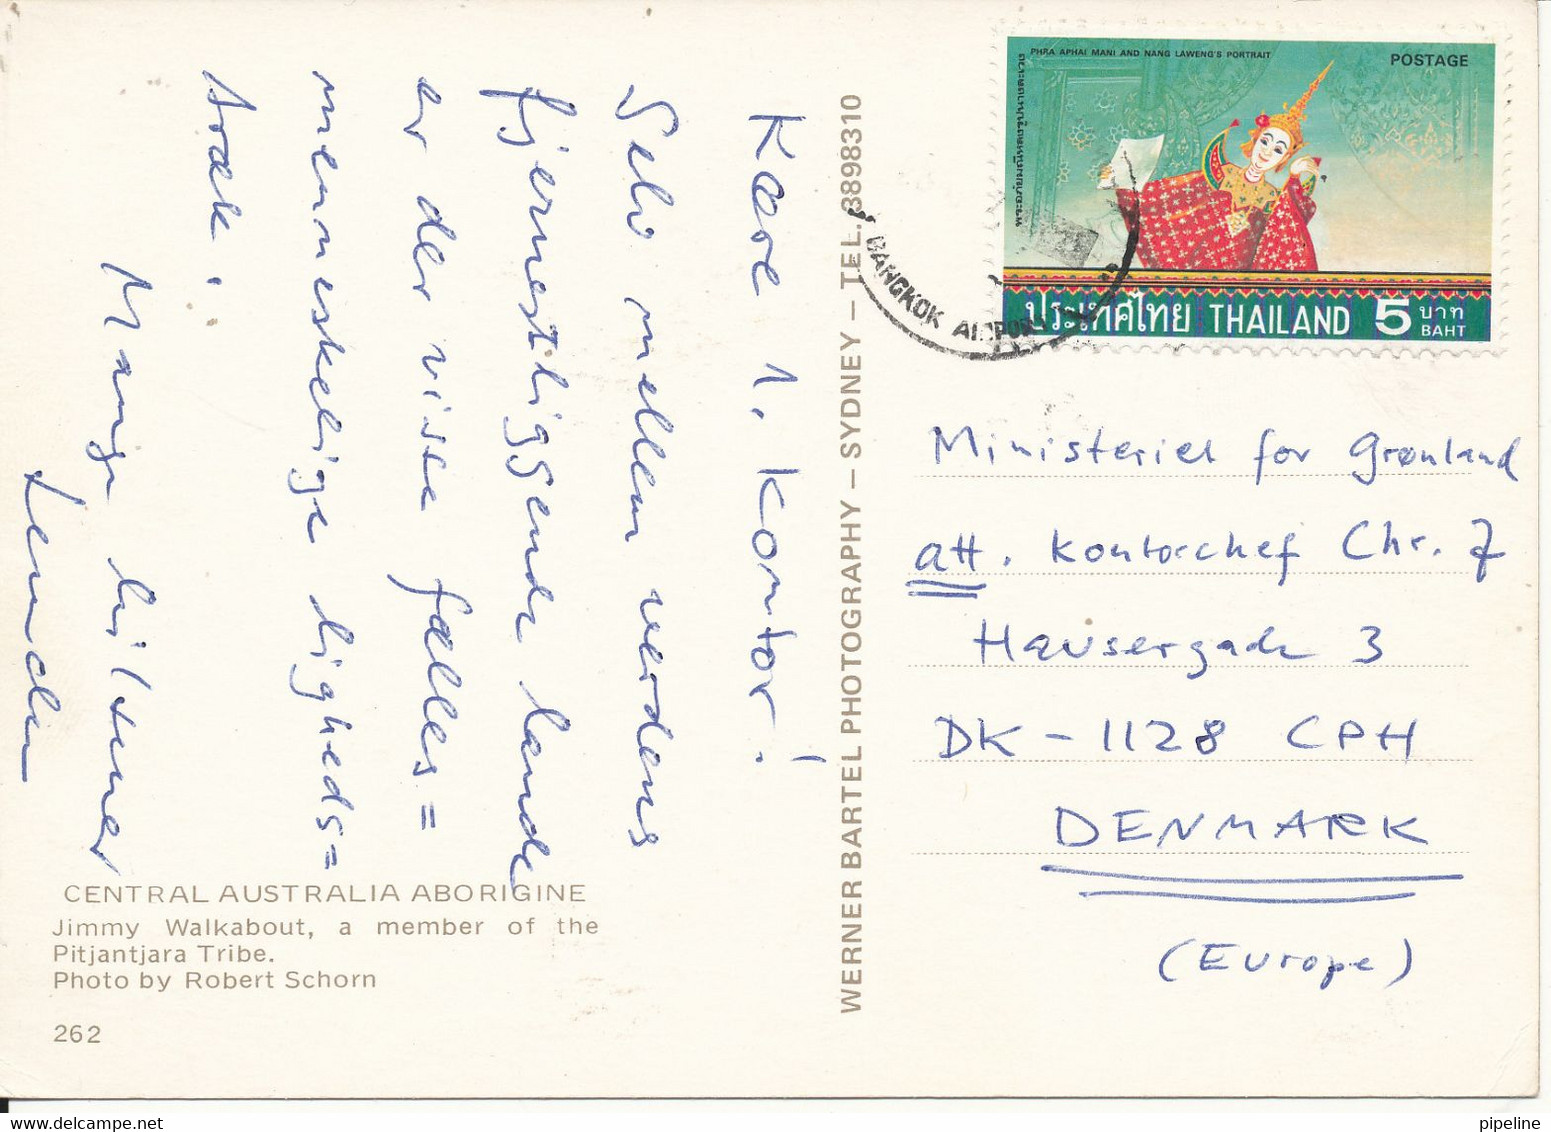 Australian Postcard Sent To Denmark With Thailand Stamp (Central Australia Aborigine) - Aborigines